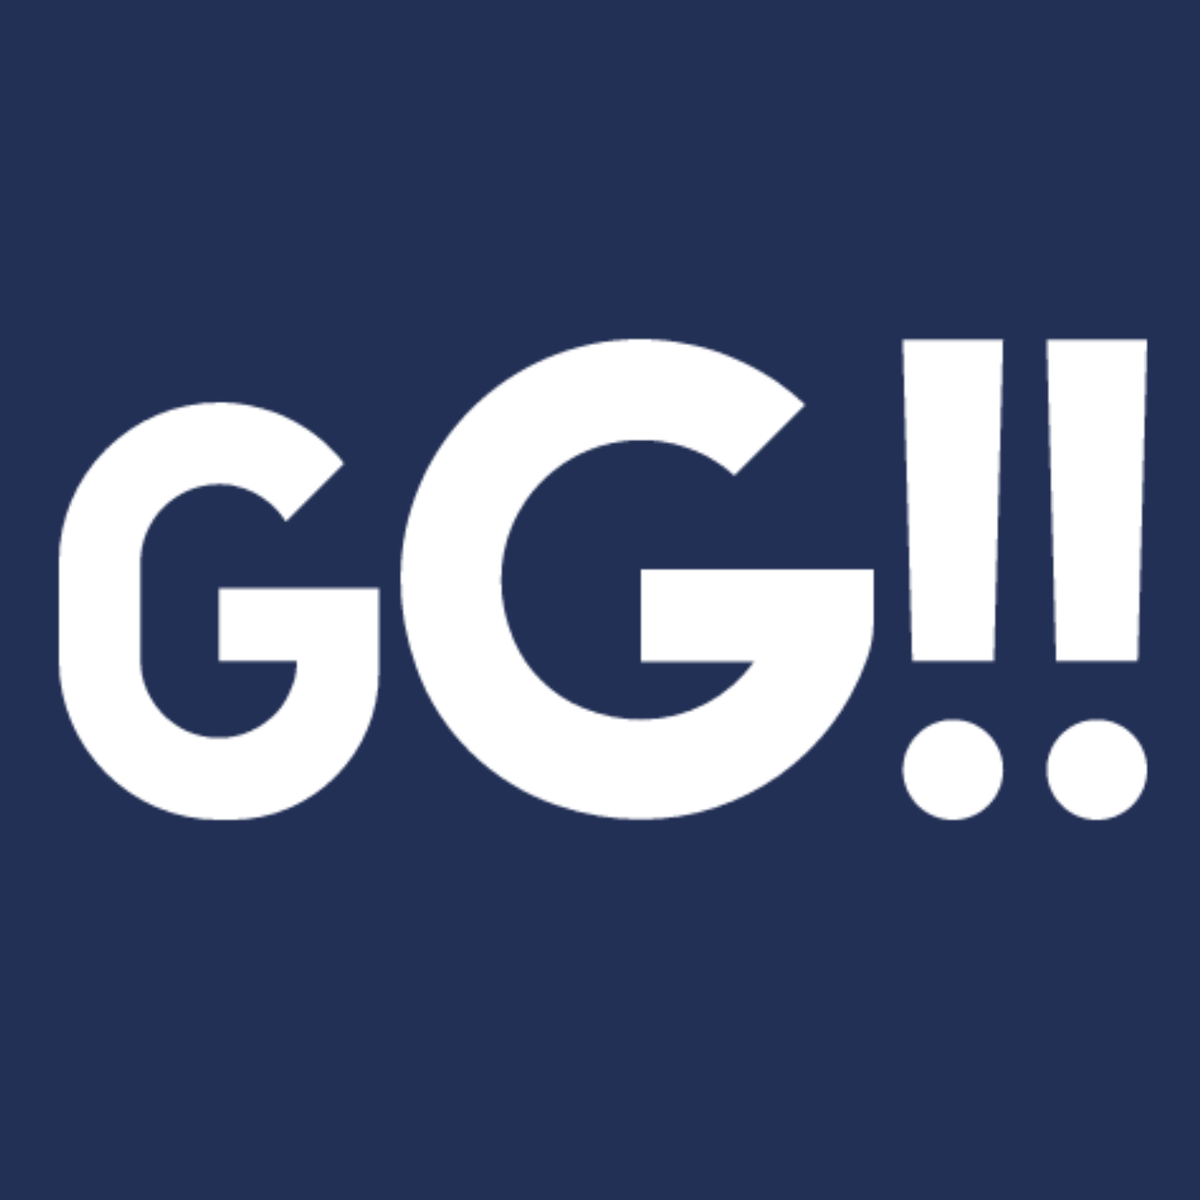 Gg eu. Goodgame. Гудгейм лого. Картинка Гудгейм. Логотип goodgame PNG.